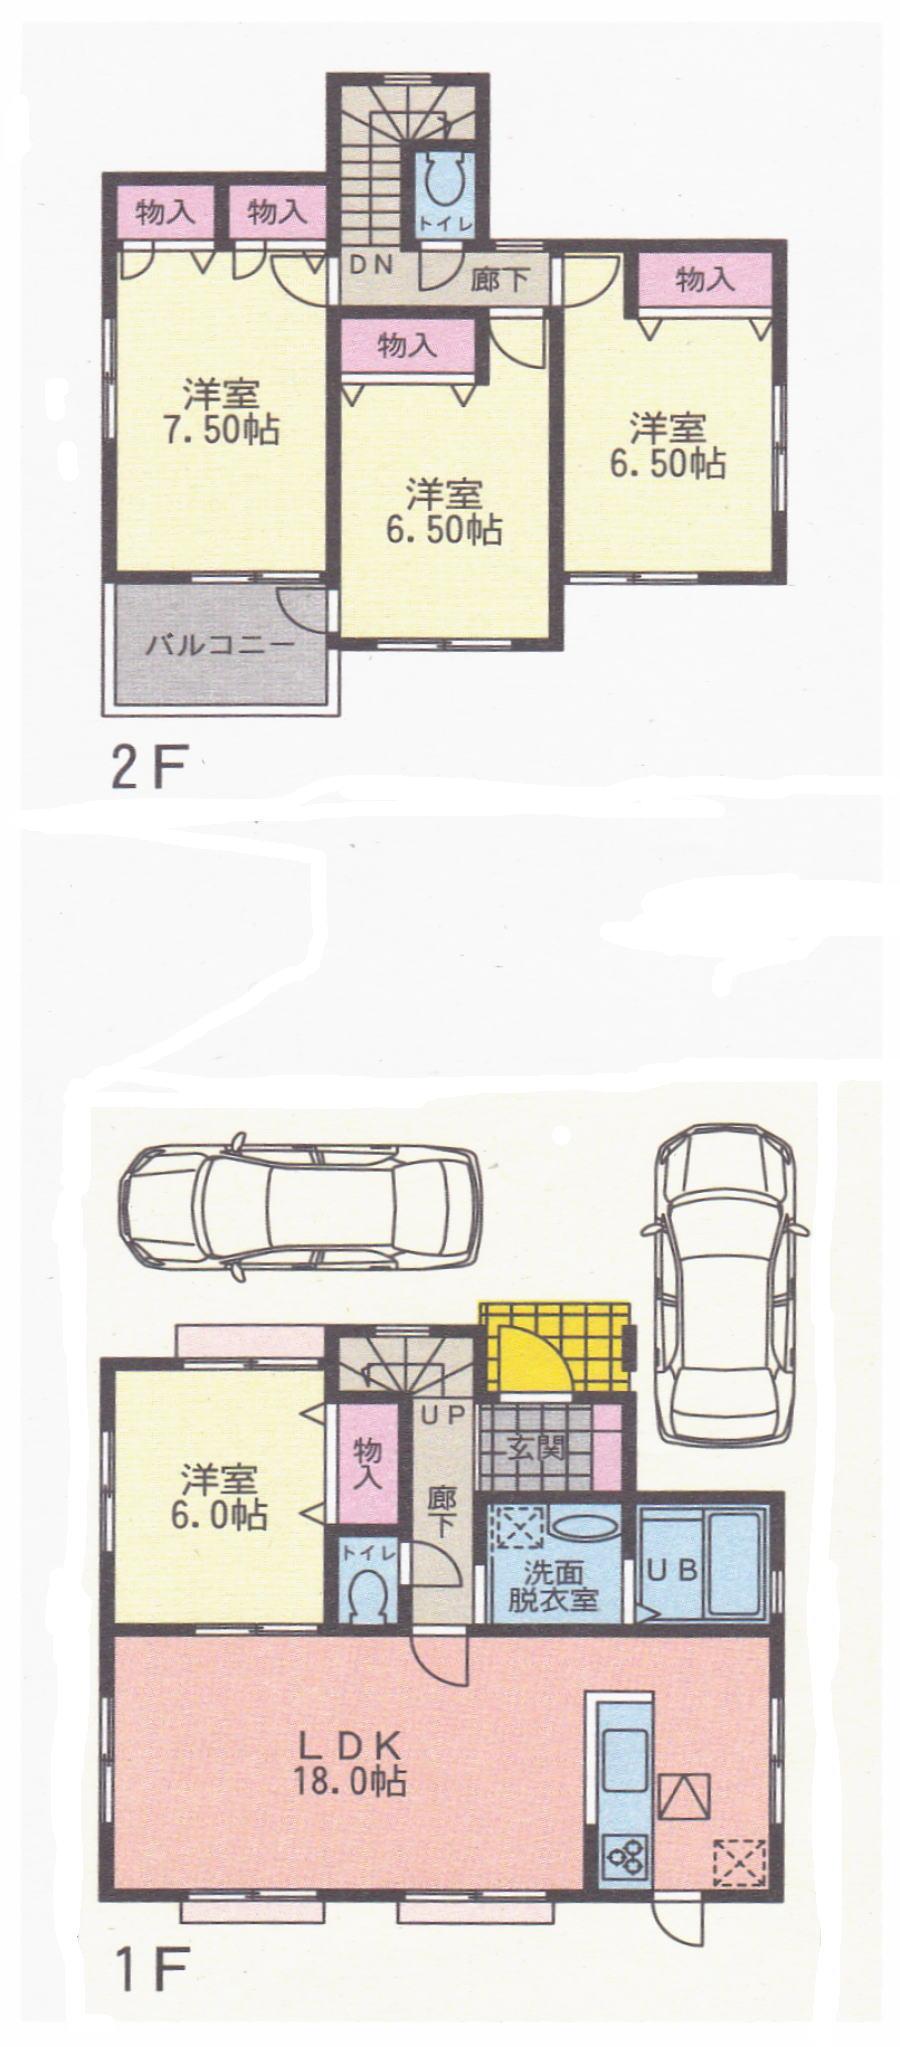 Floor plan. (A), Price 45,800,000 yen, 4LDK, Land area 140.15 sq m , Building area 102.68 sq m